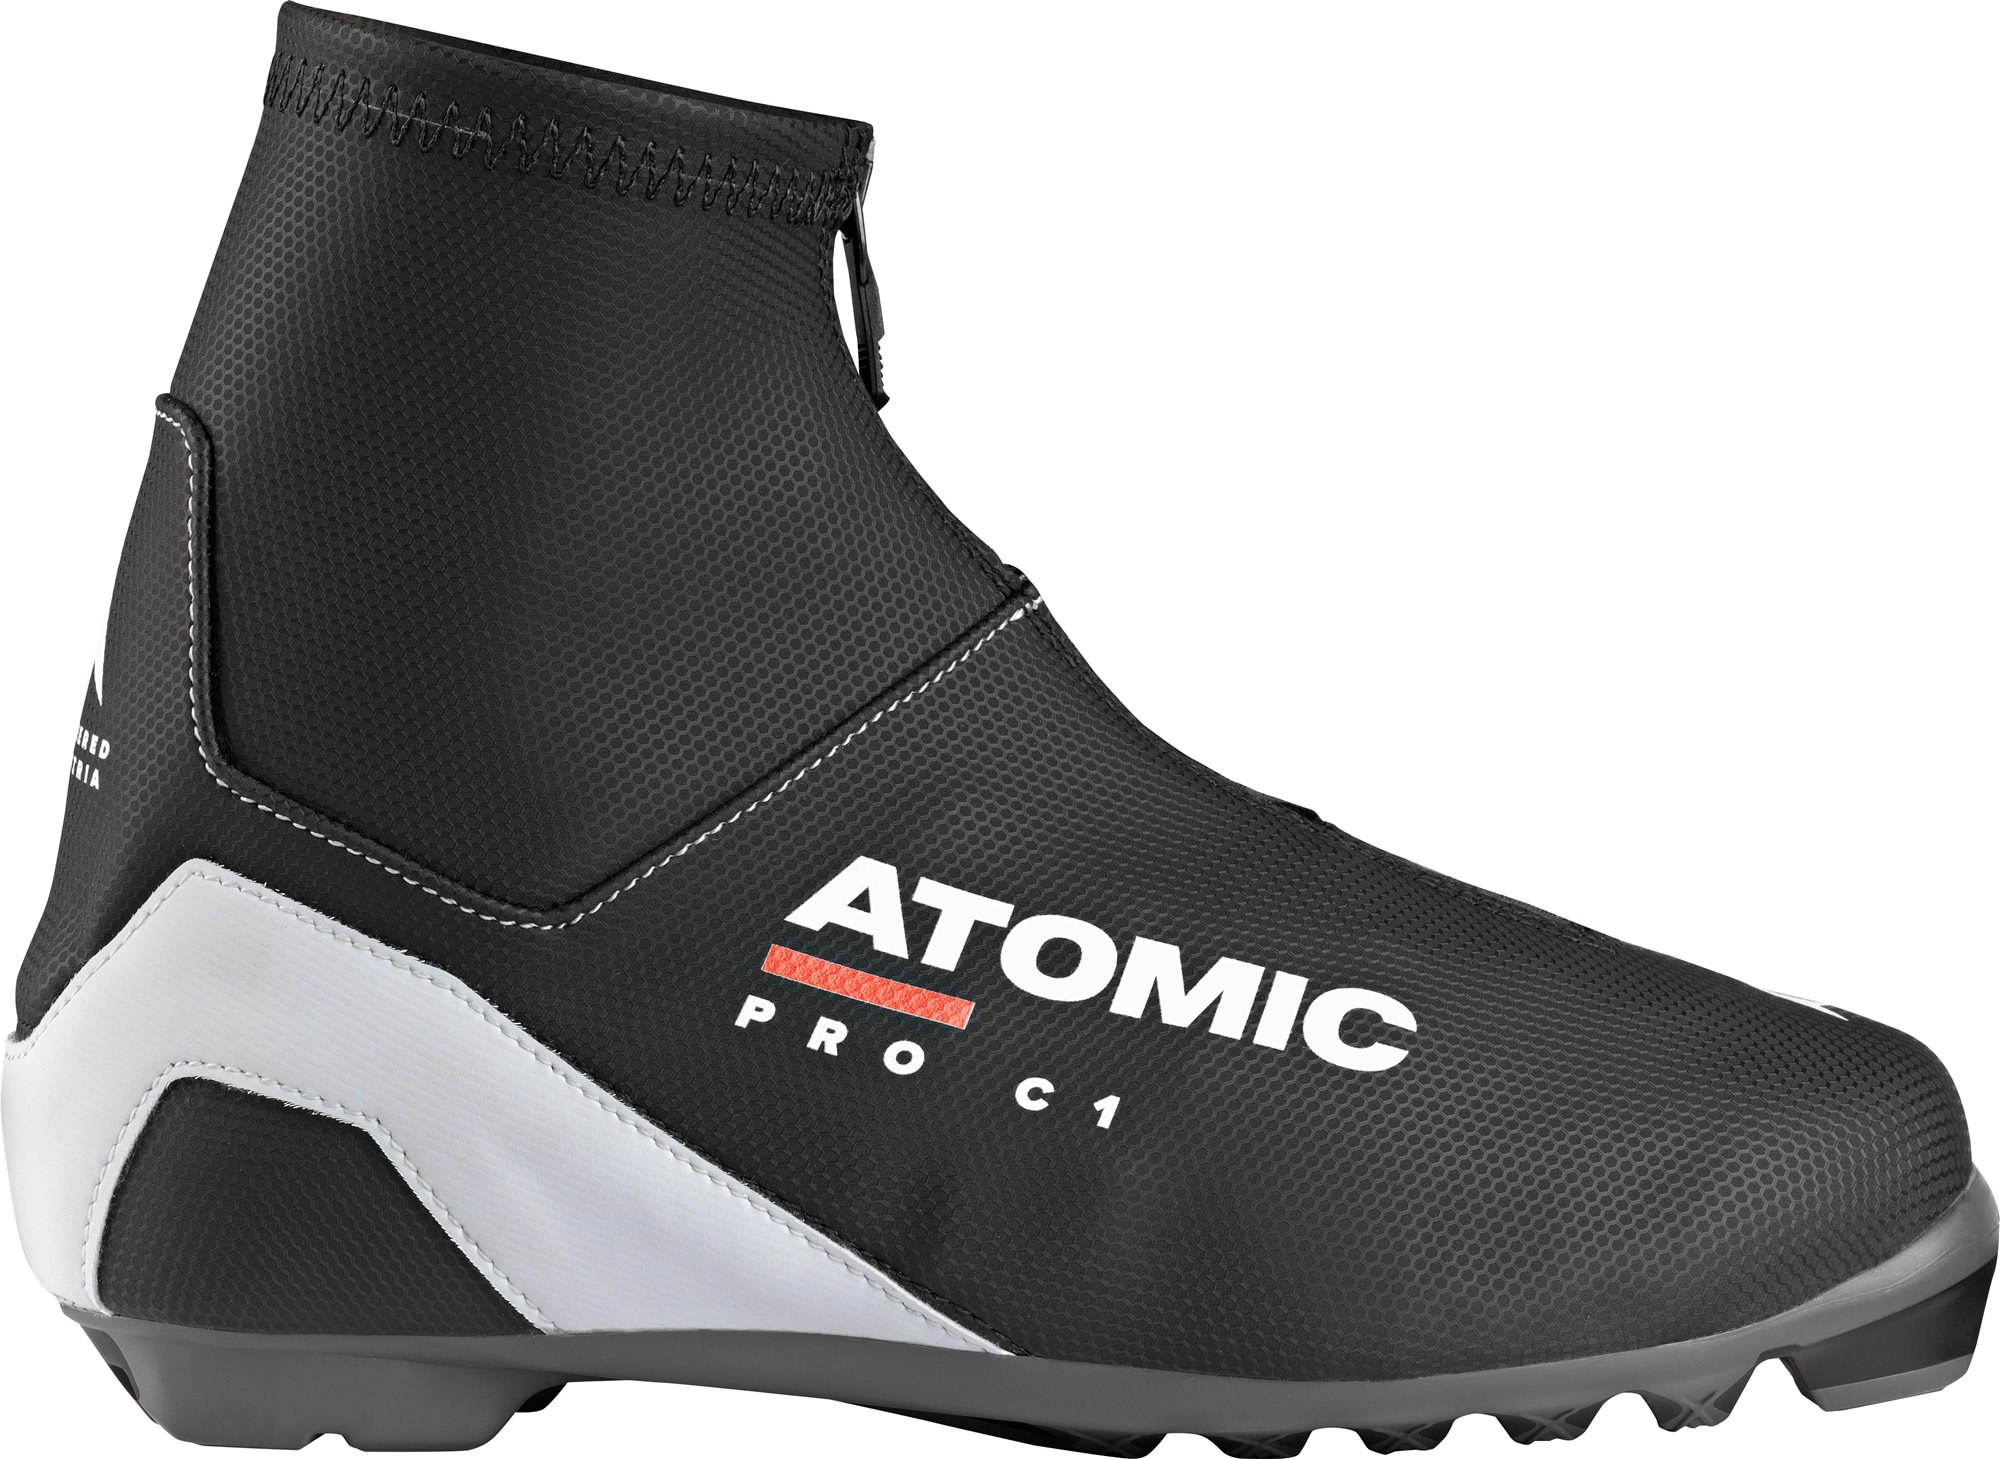 Sífutócipő Atomic PRO C1 W Dark Grey/Bl CLASSIC méret 38 EU